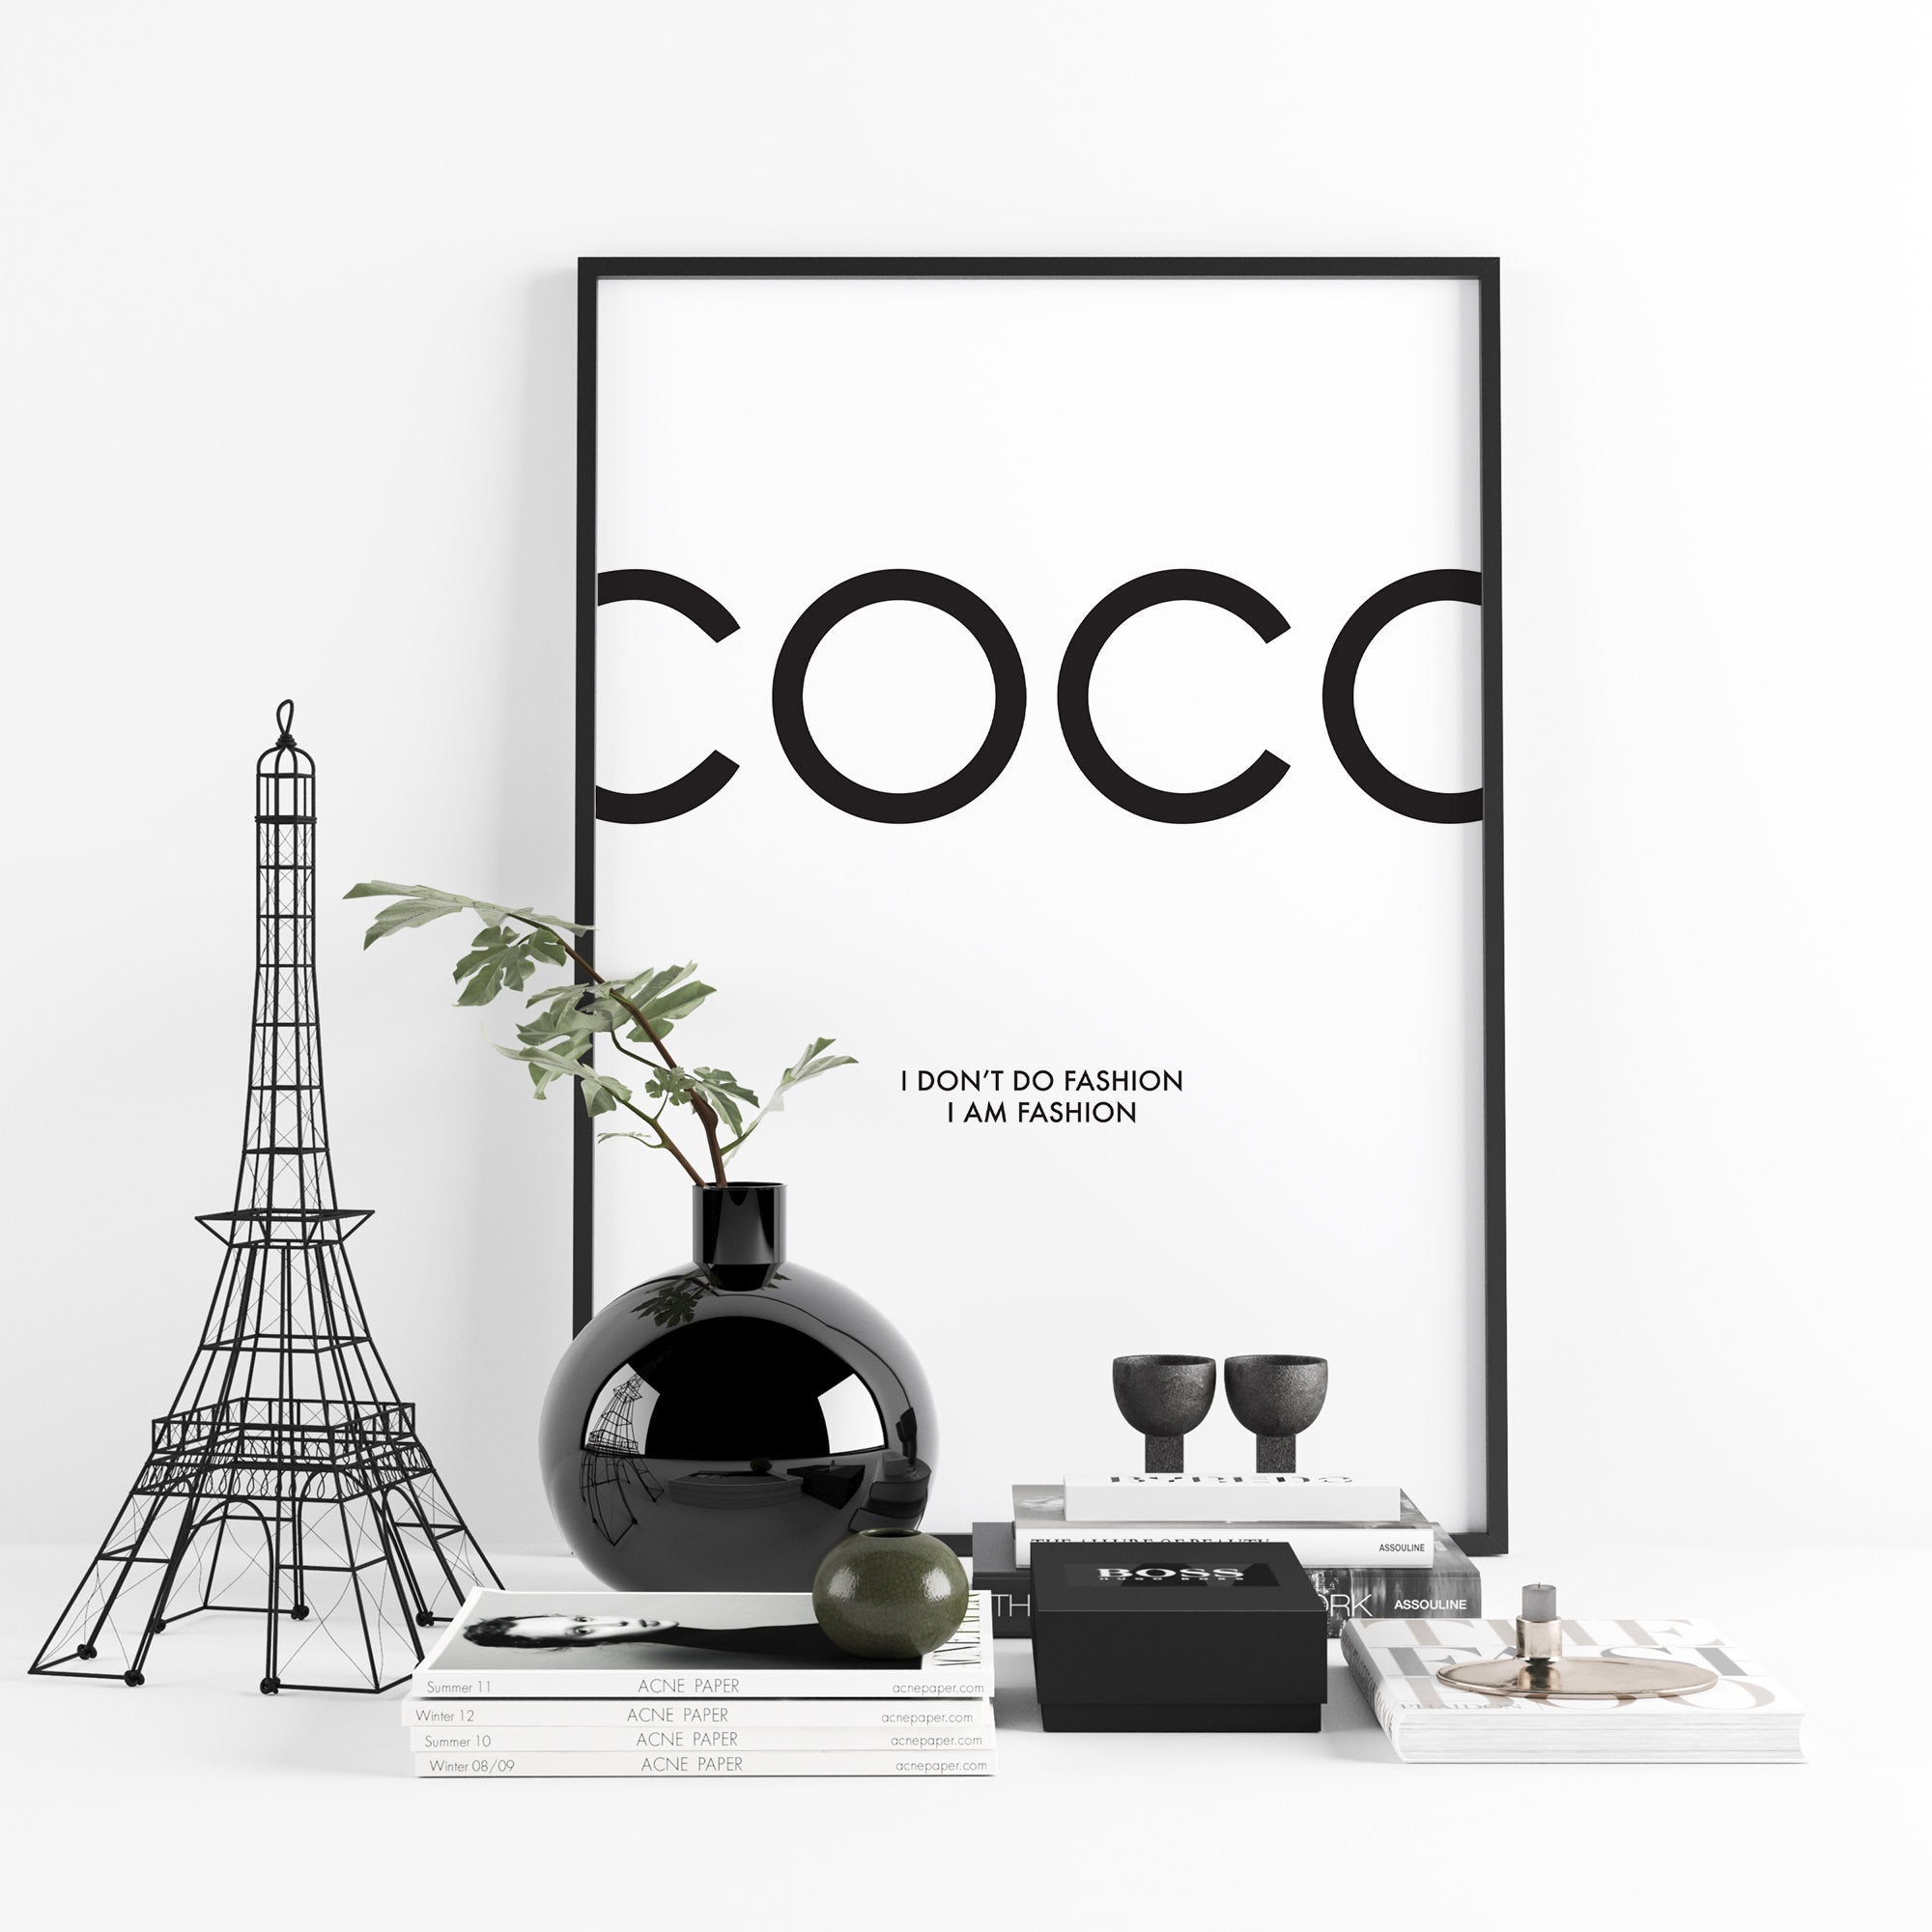 Coco Chanel I am fashion quote poster